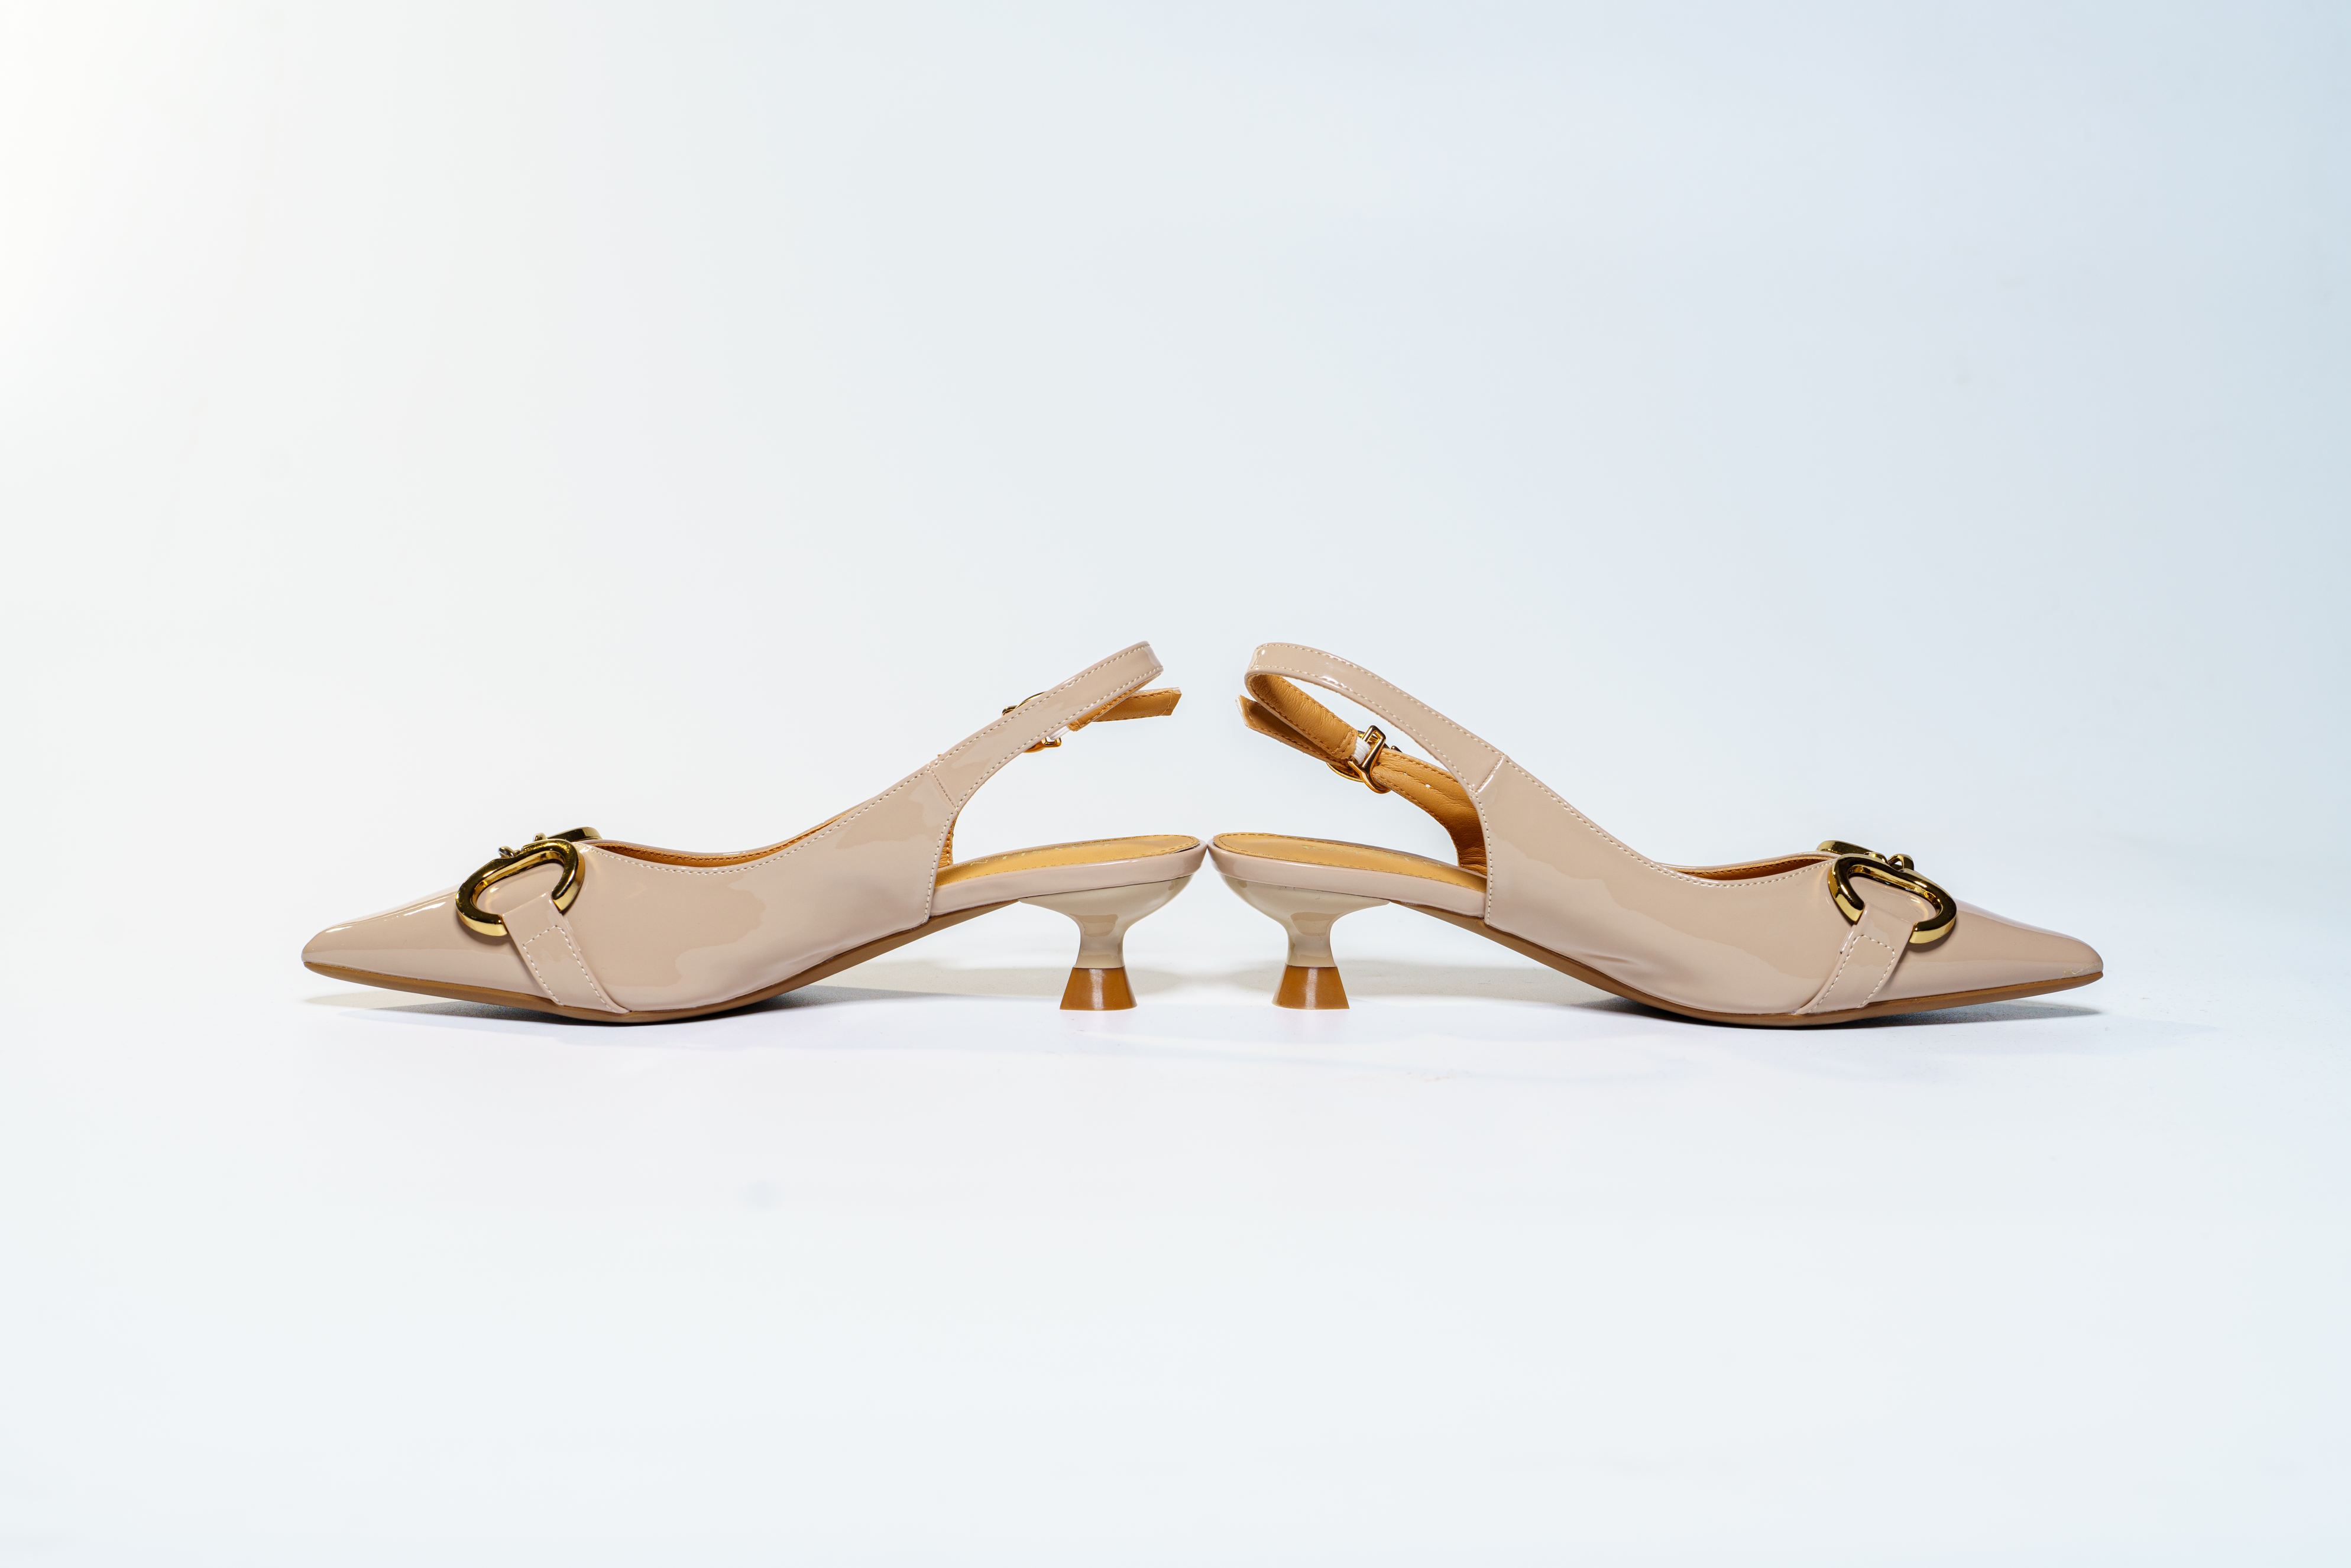 Stylish ladies' Elegance - Beige/Khaki pointed-toe slingbacks from Rayseen.store